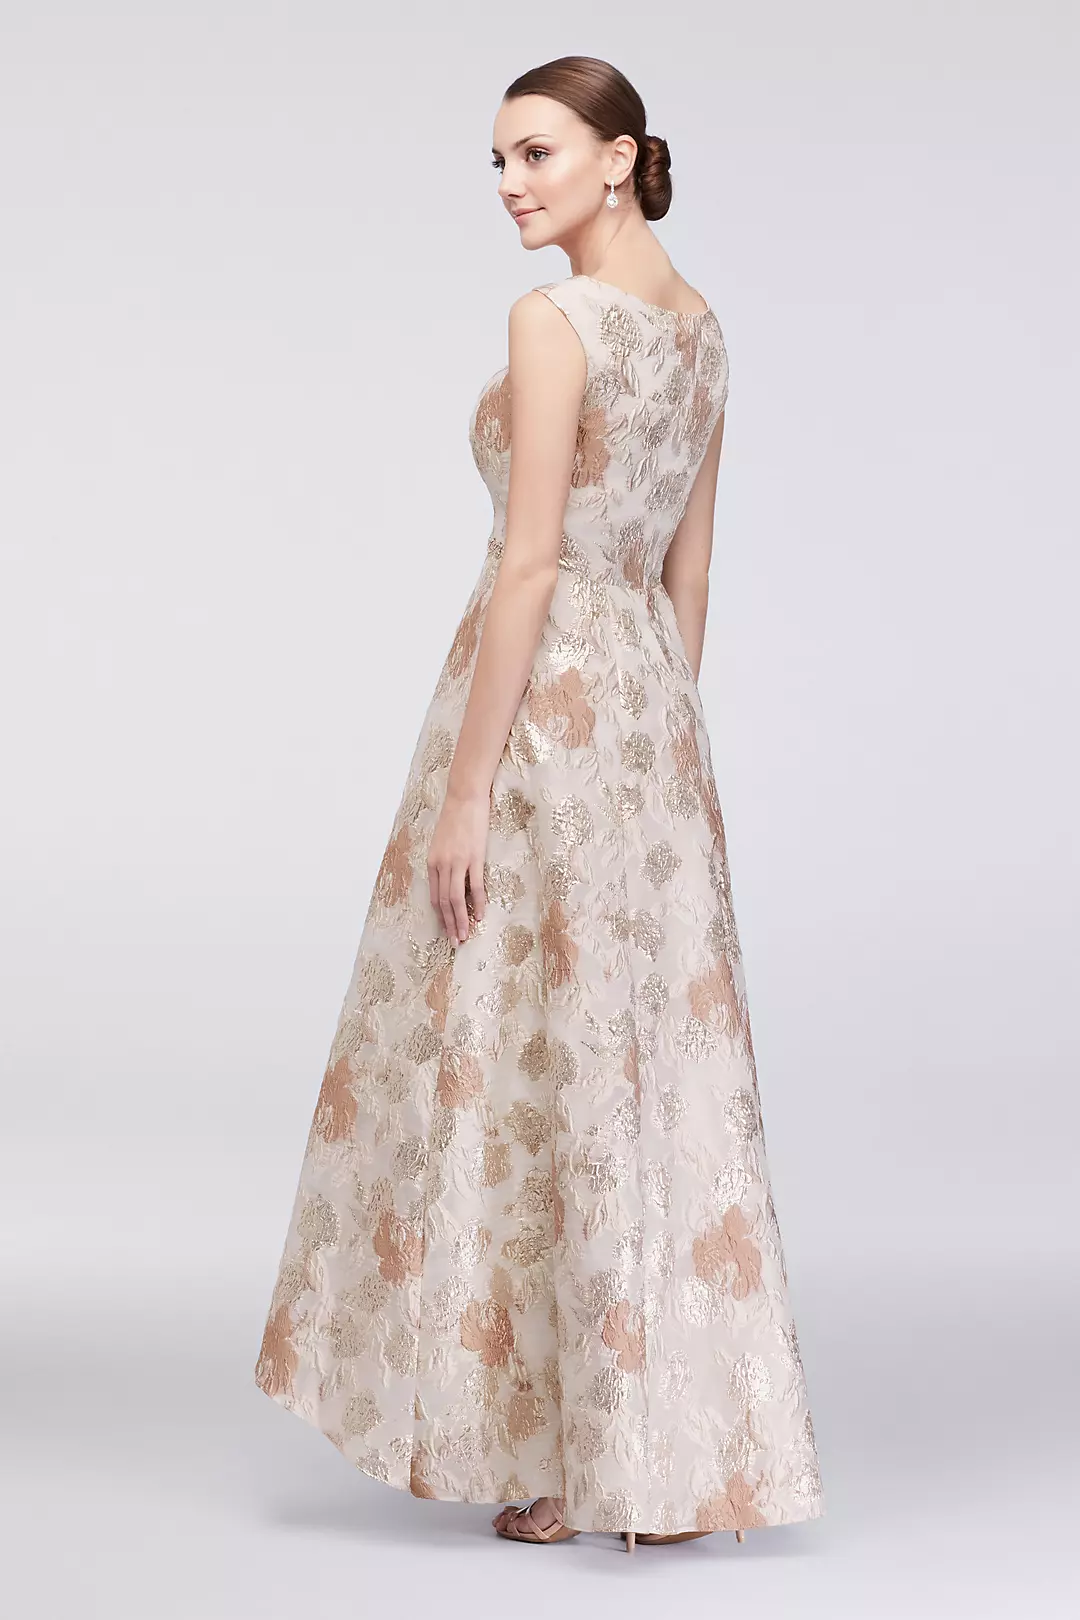 Brocade Tea-Length Dress with Crystal Belt Image 2